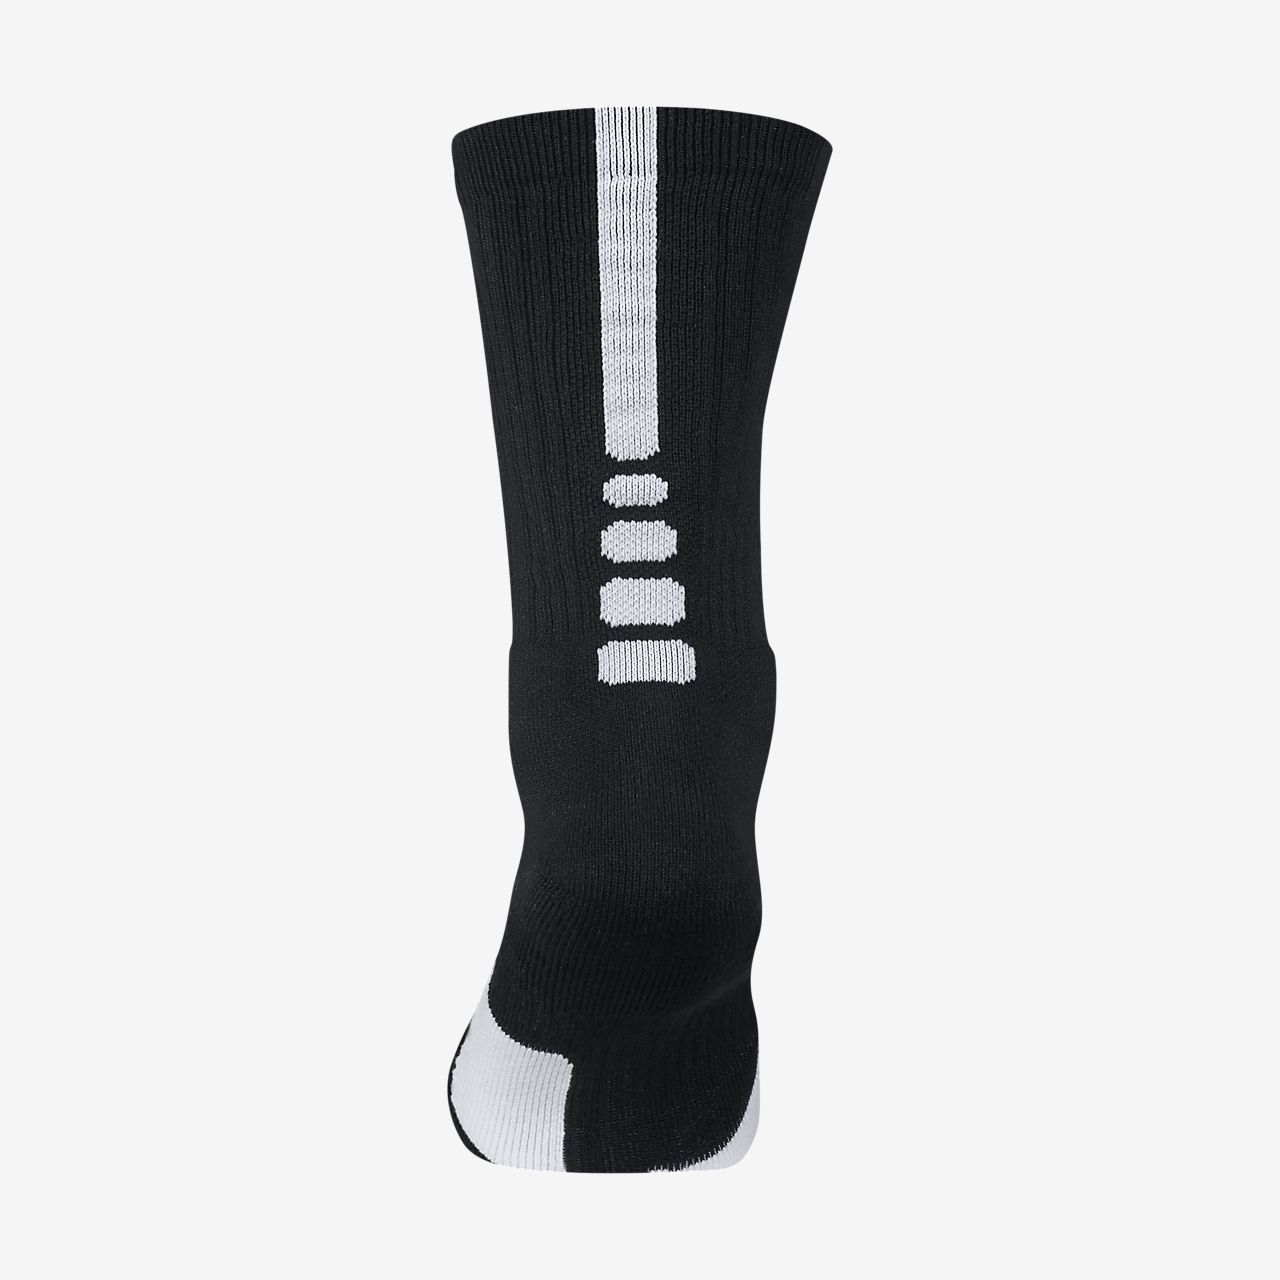 Nike Dry Elite 1 5 Crew Basketball Socks Size Chart